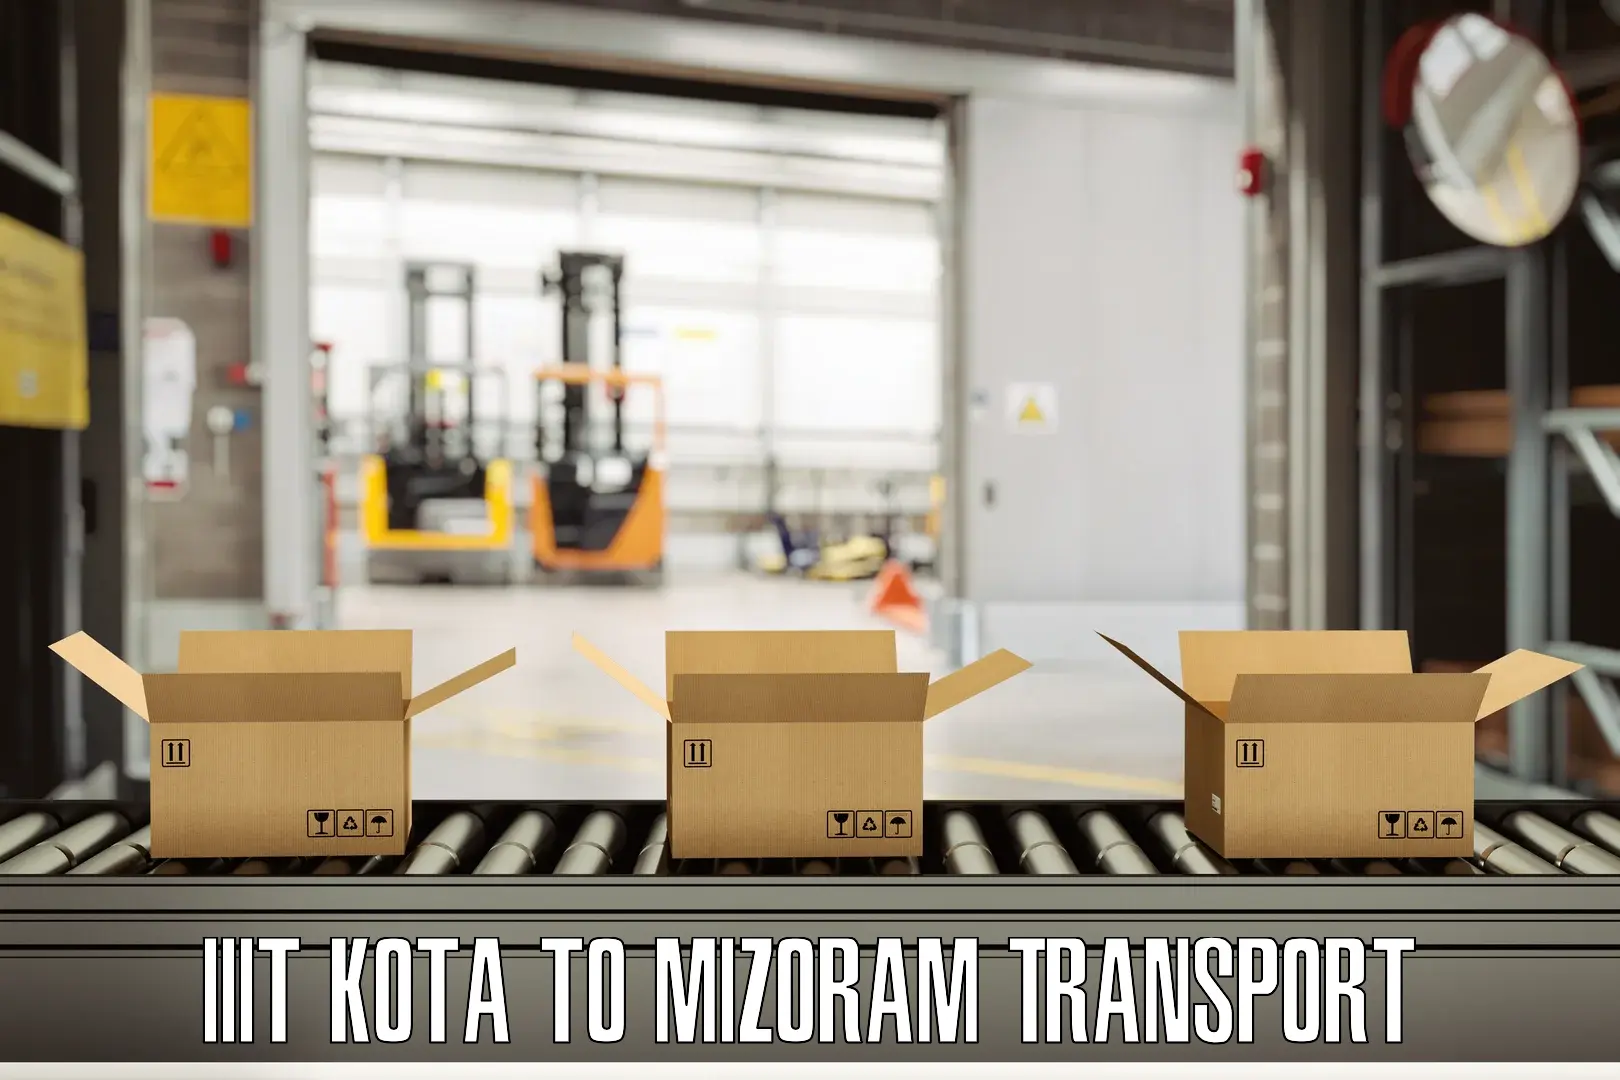 Transport in sharing IIIT Kota to Mizoram